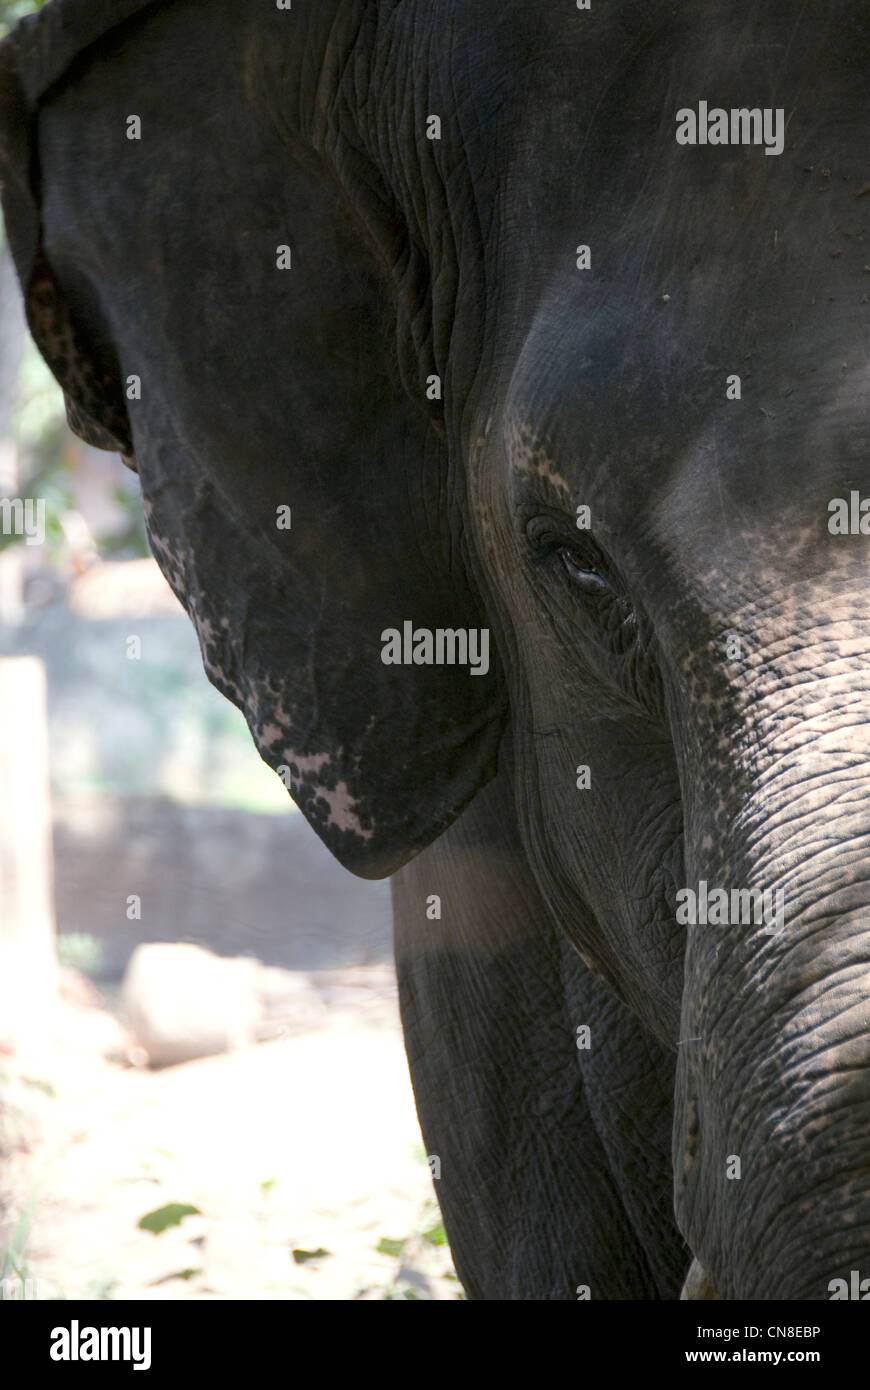 Front profile view of a healthy elephant at Punnathur Kotta Elephant Sanctuary, Kerala, India Stock Photo